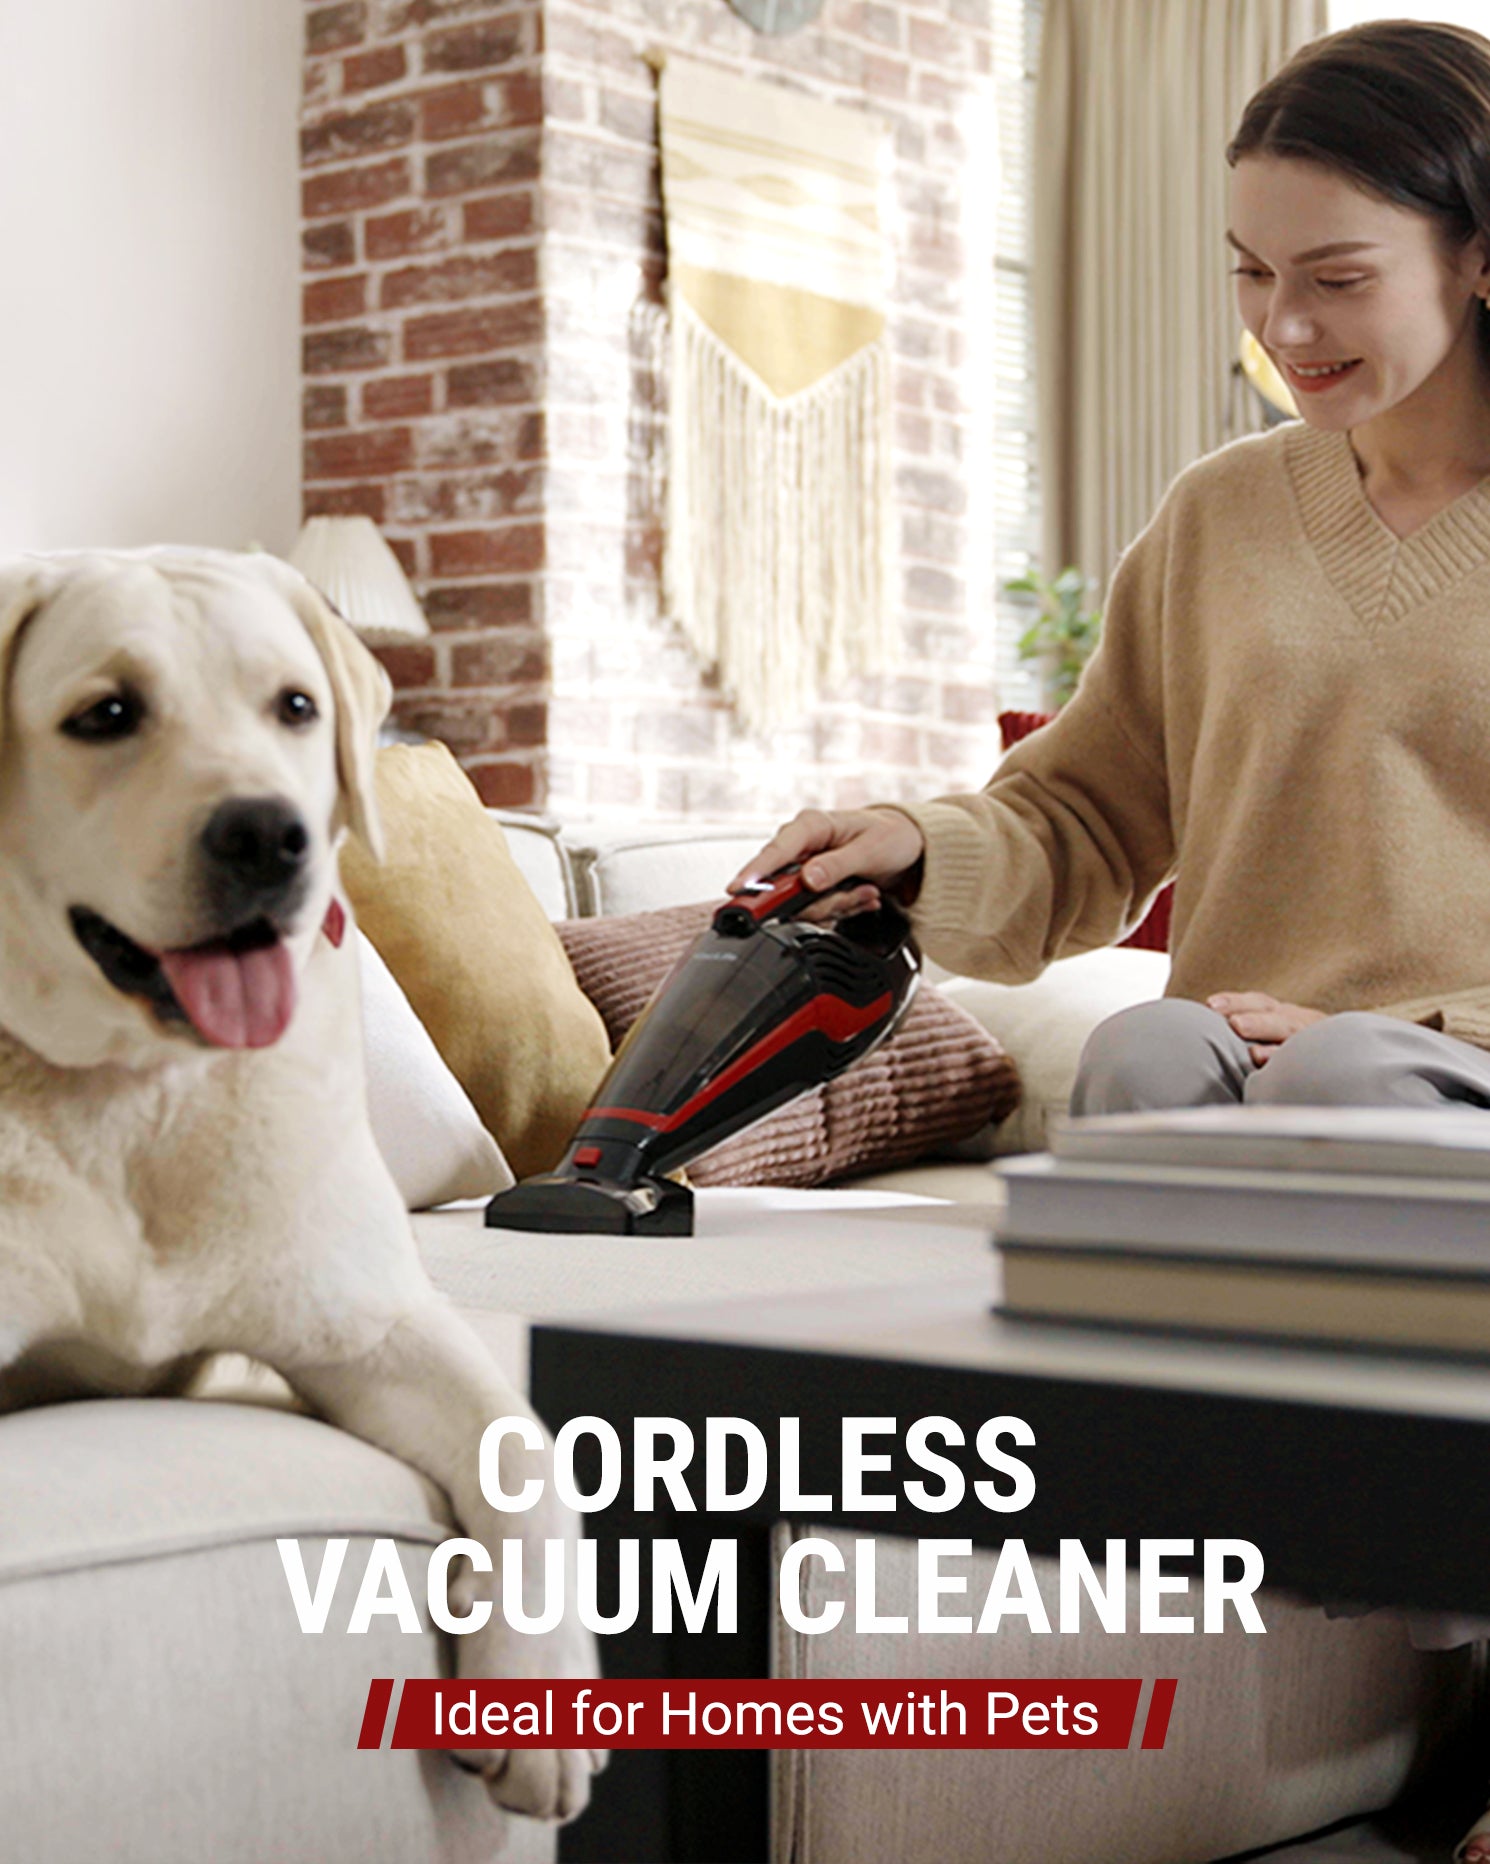  VacLife Handheld Vacuum, Car Hand Vacuum Cleaner